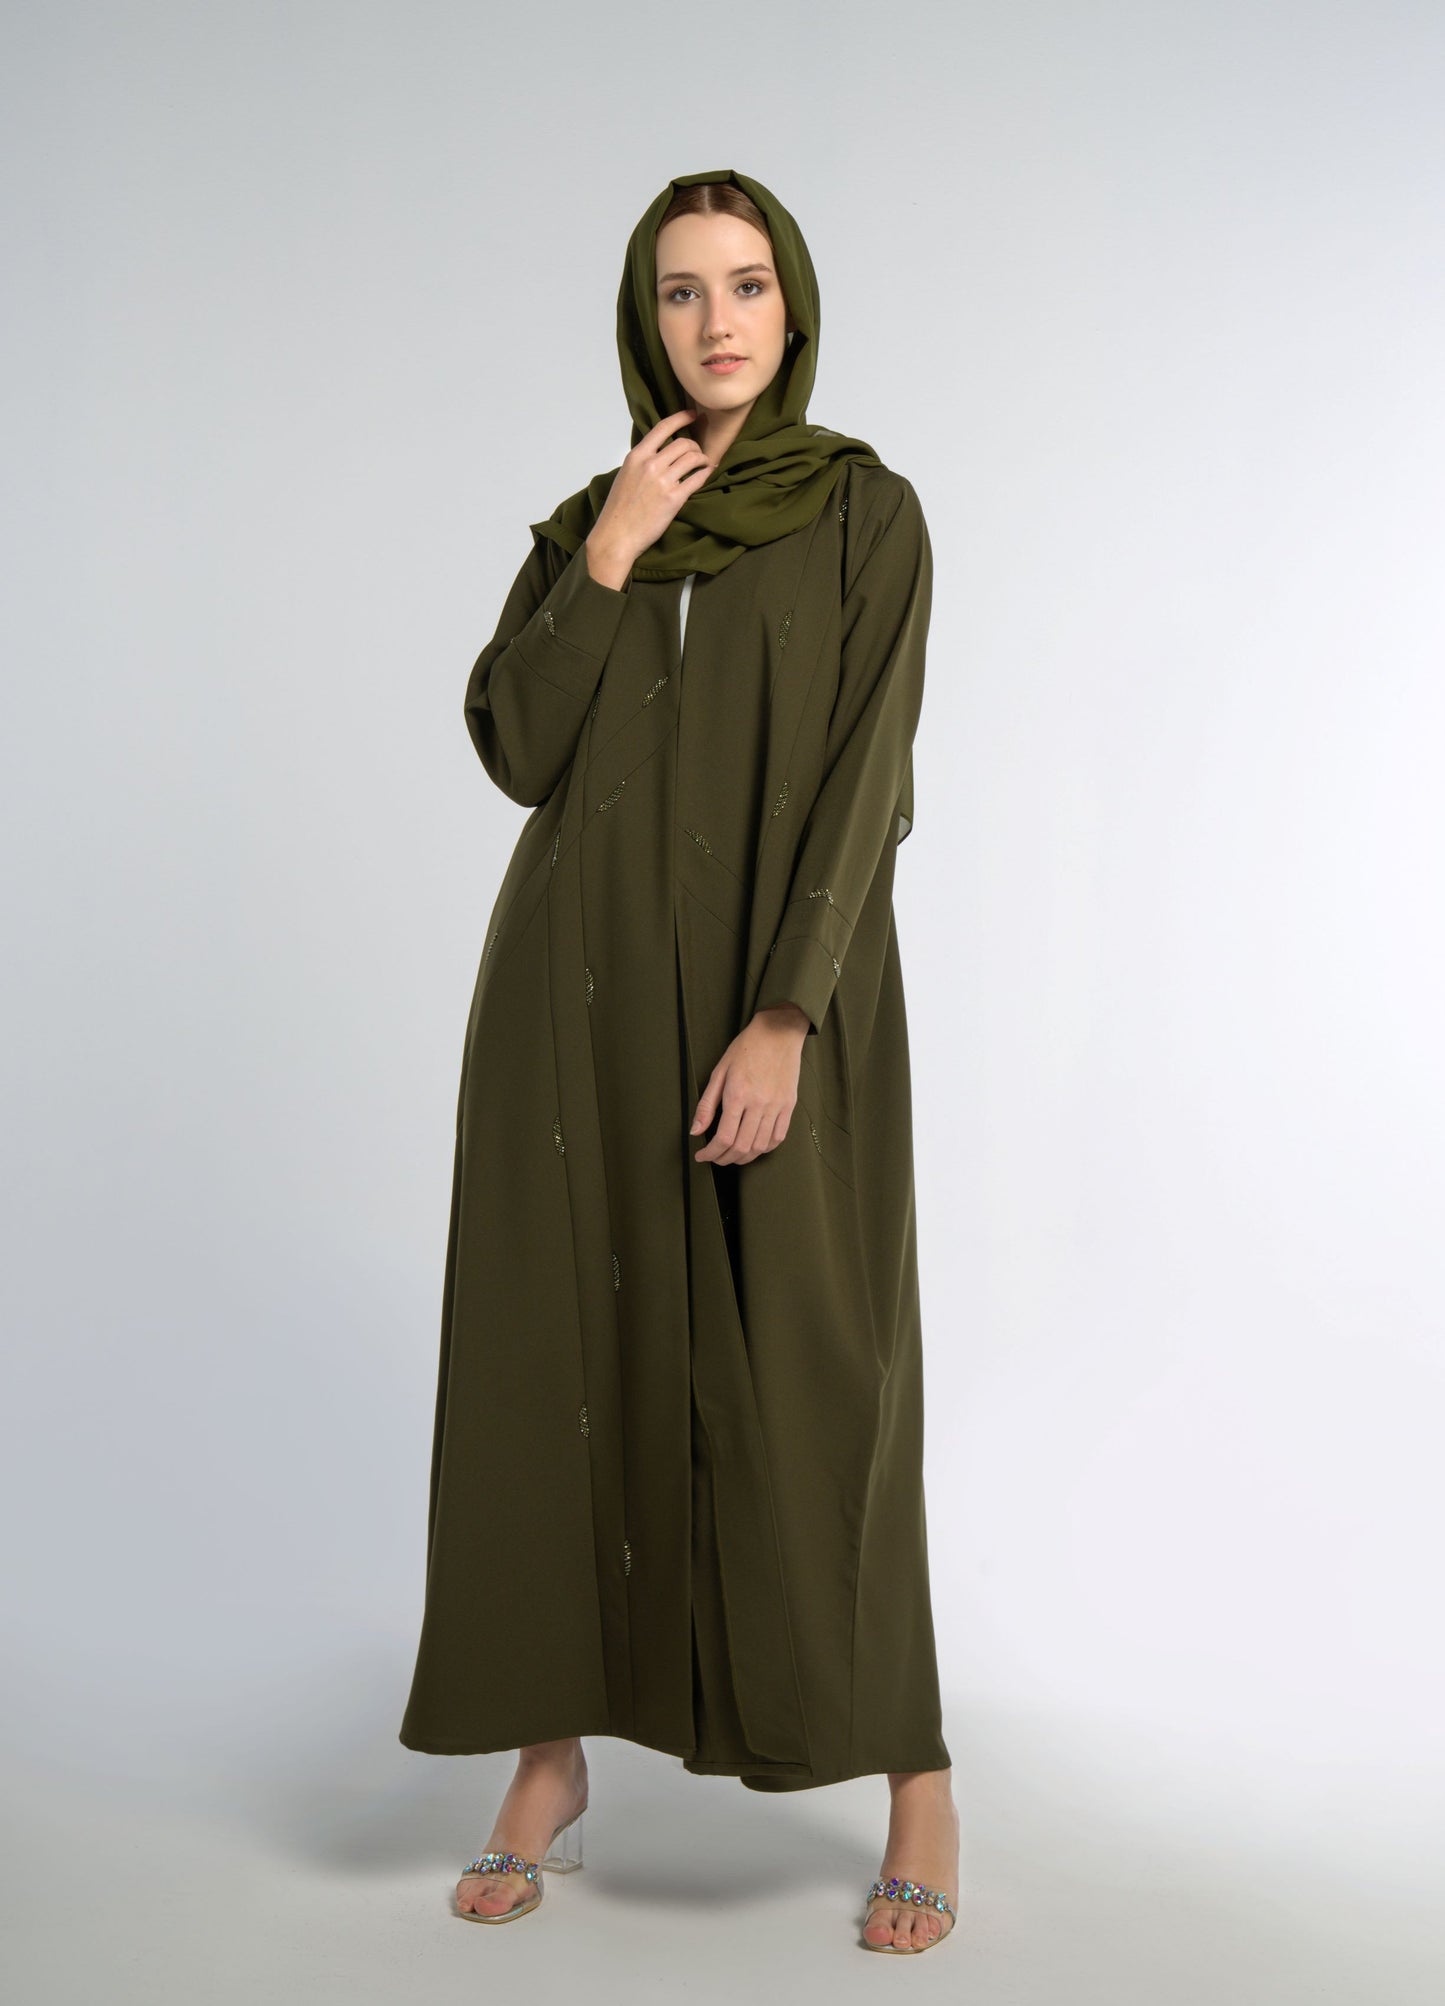 Green colored abaya with matching Sheila